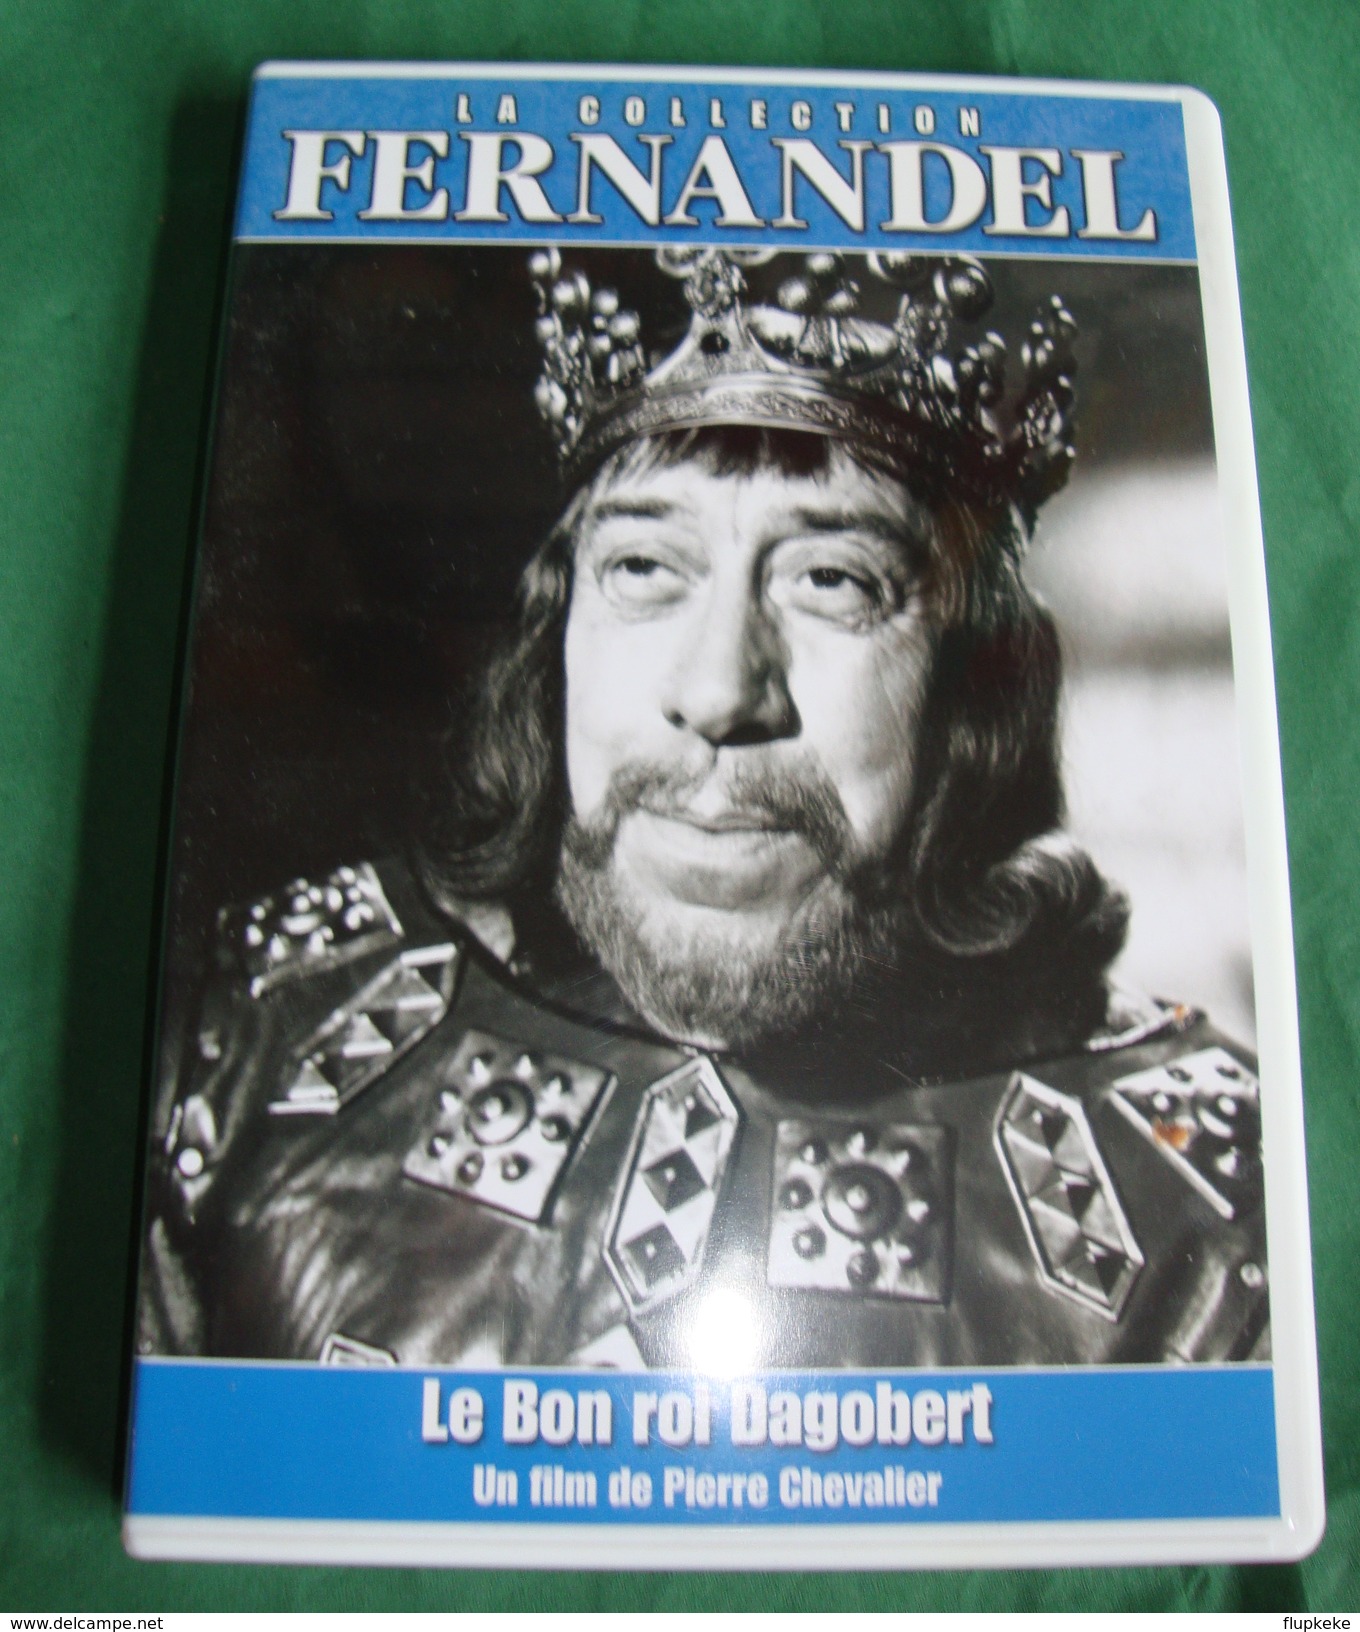 Dvd Zone 2 Le Bon Roi Dagobert 1963 Collection Fernandel Vf - Comedy